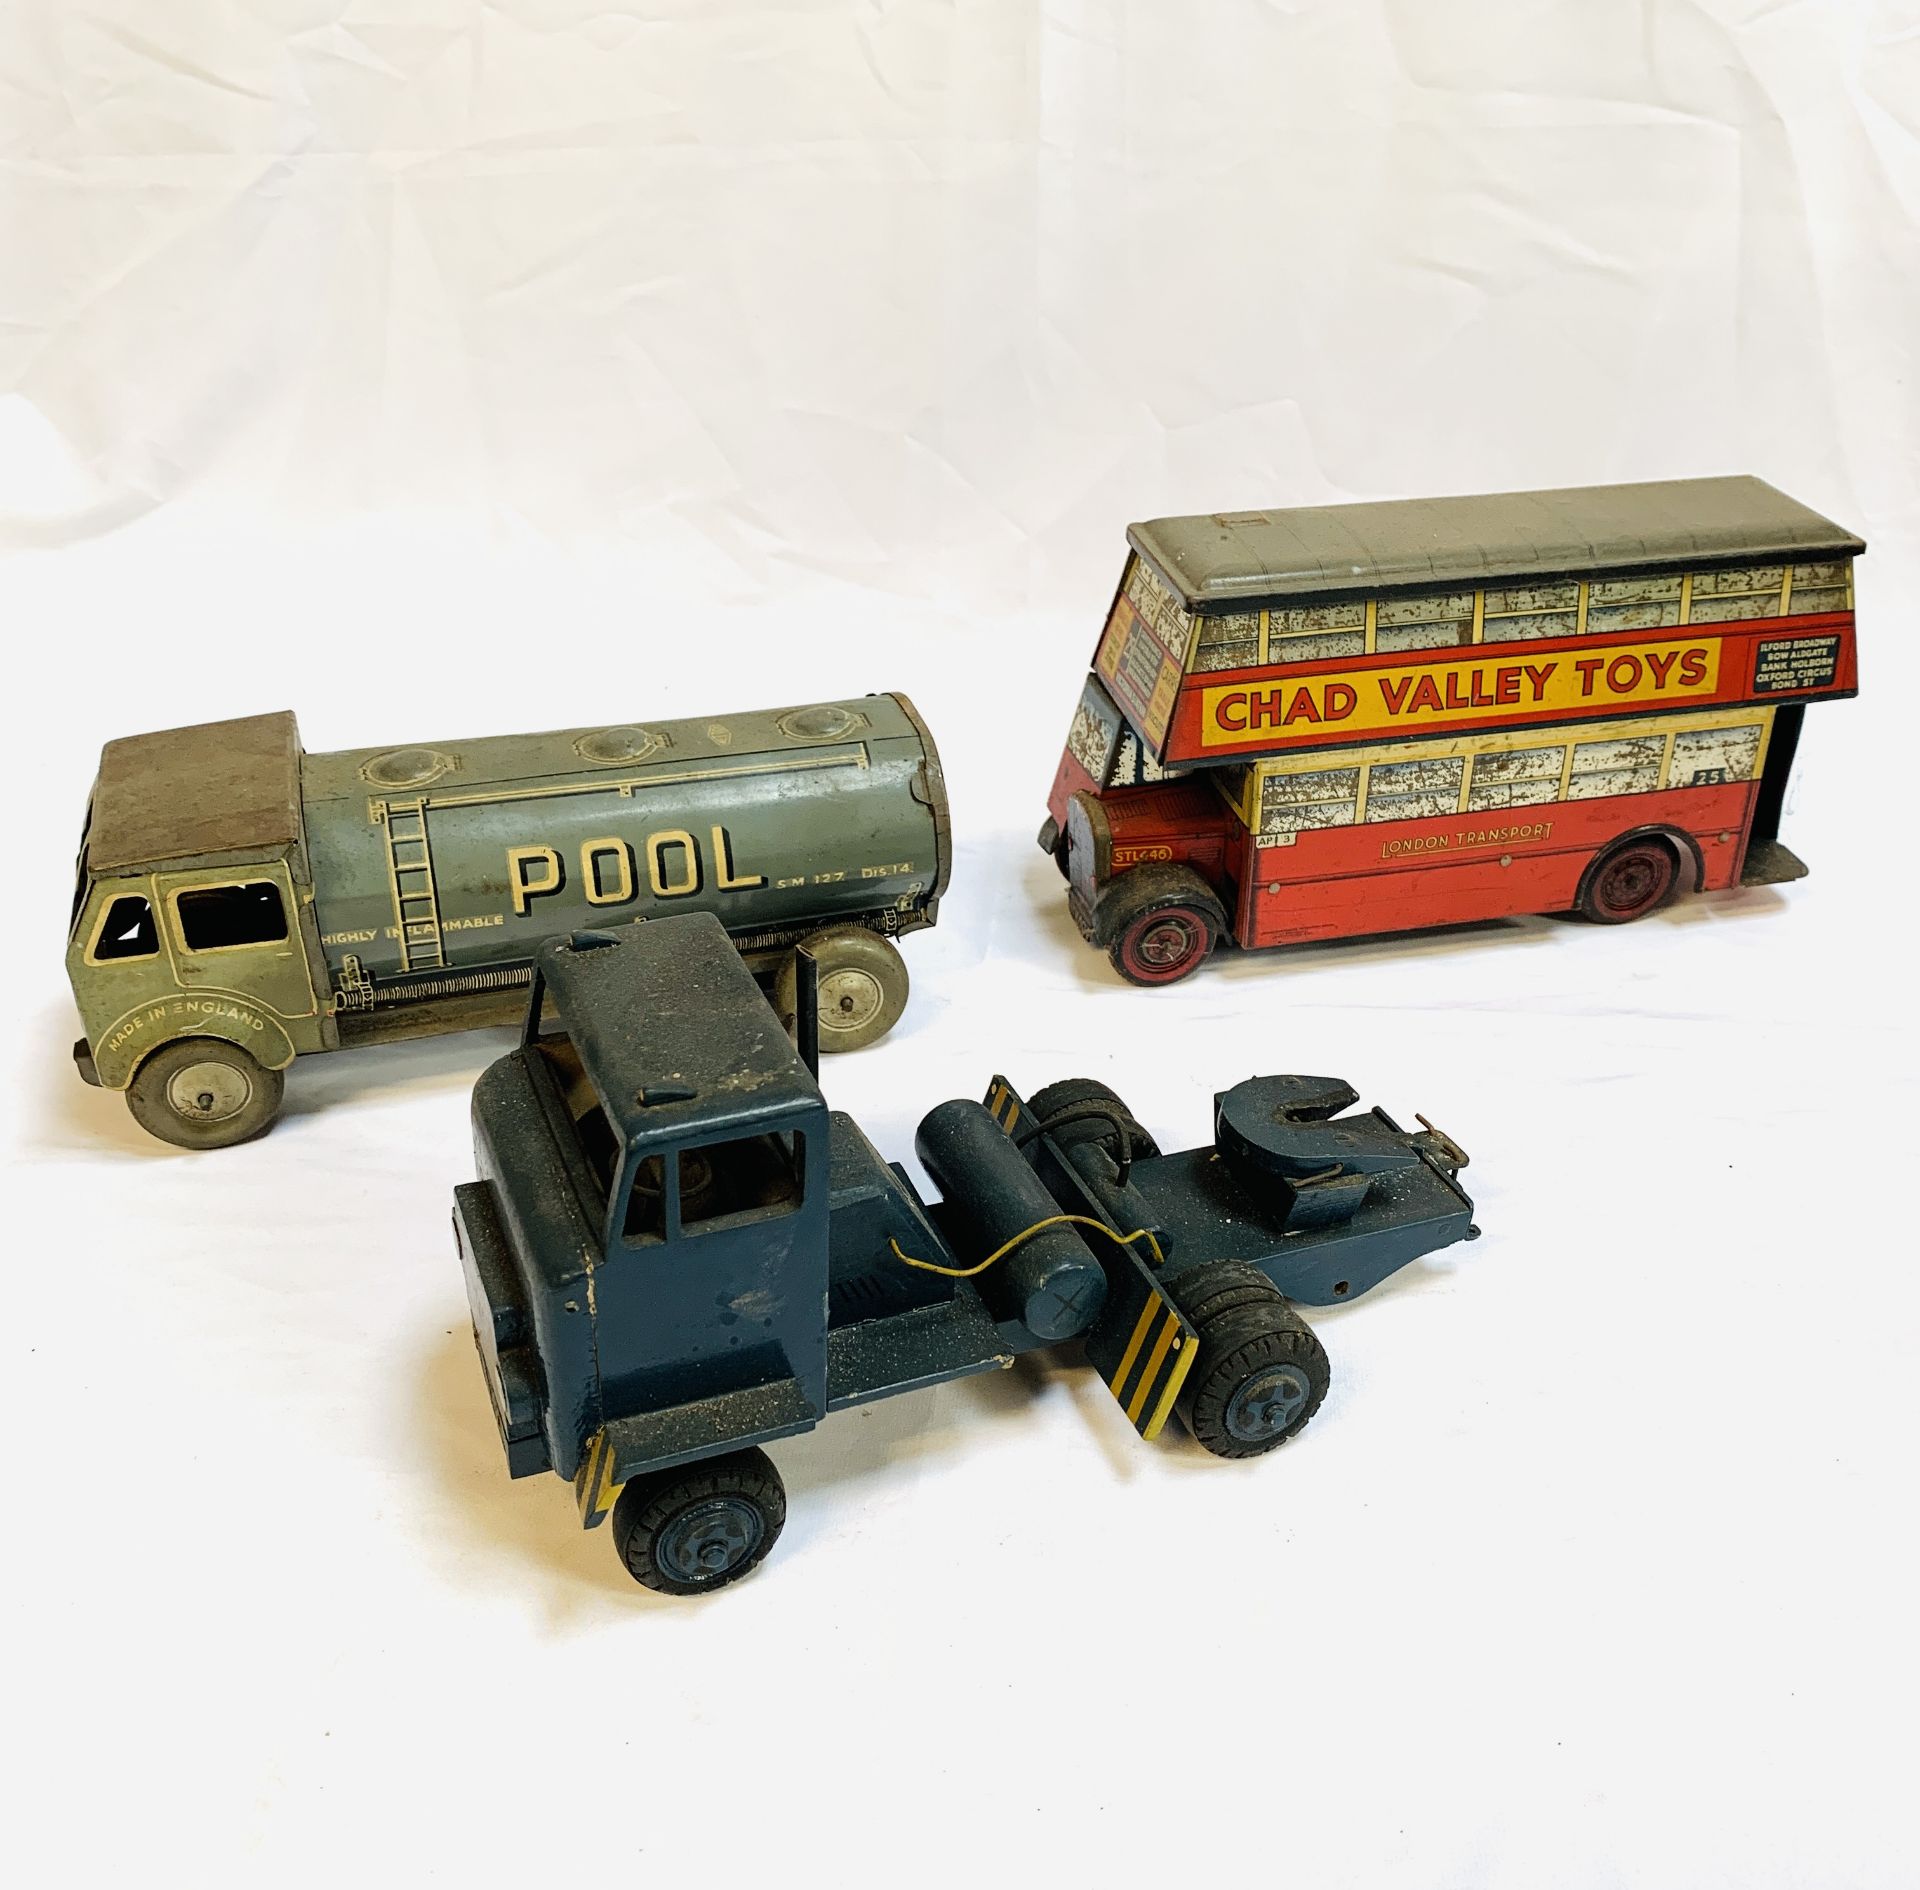 Chad Valley toys tin plate model London Transport bus; tinplate clockwork model tanker